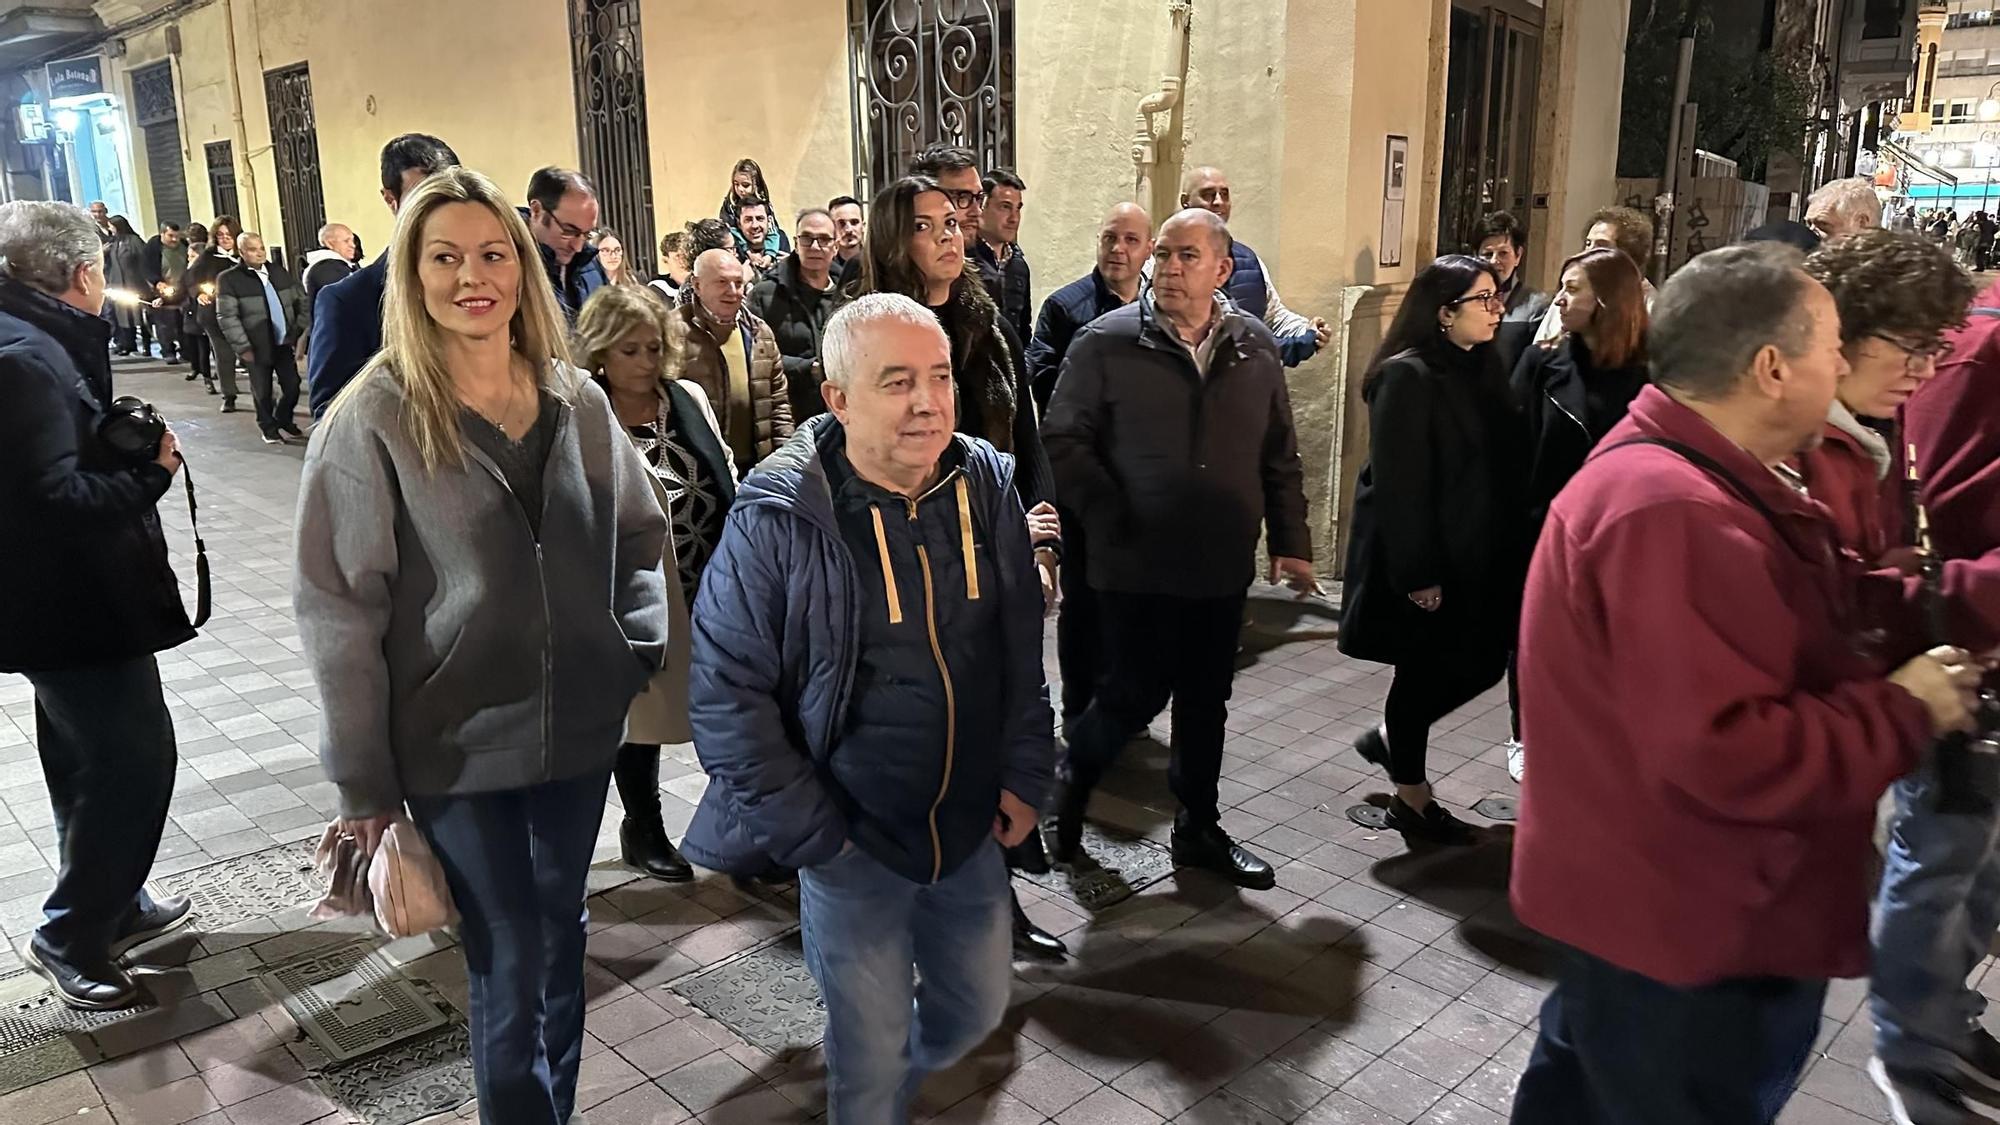 Las mejores imágenes de la hoguera de Sant Antoni de Alzira